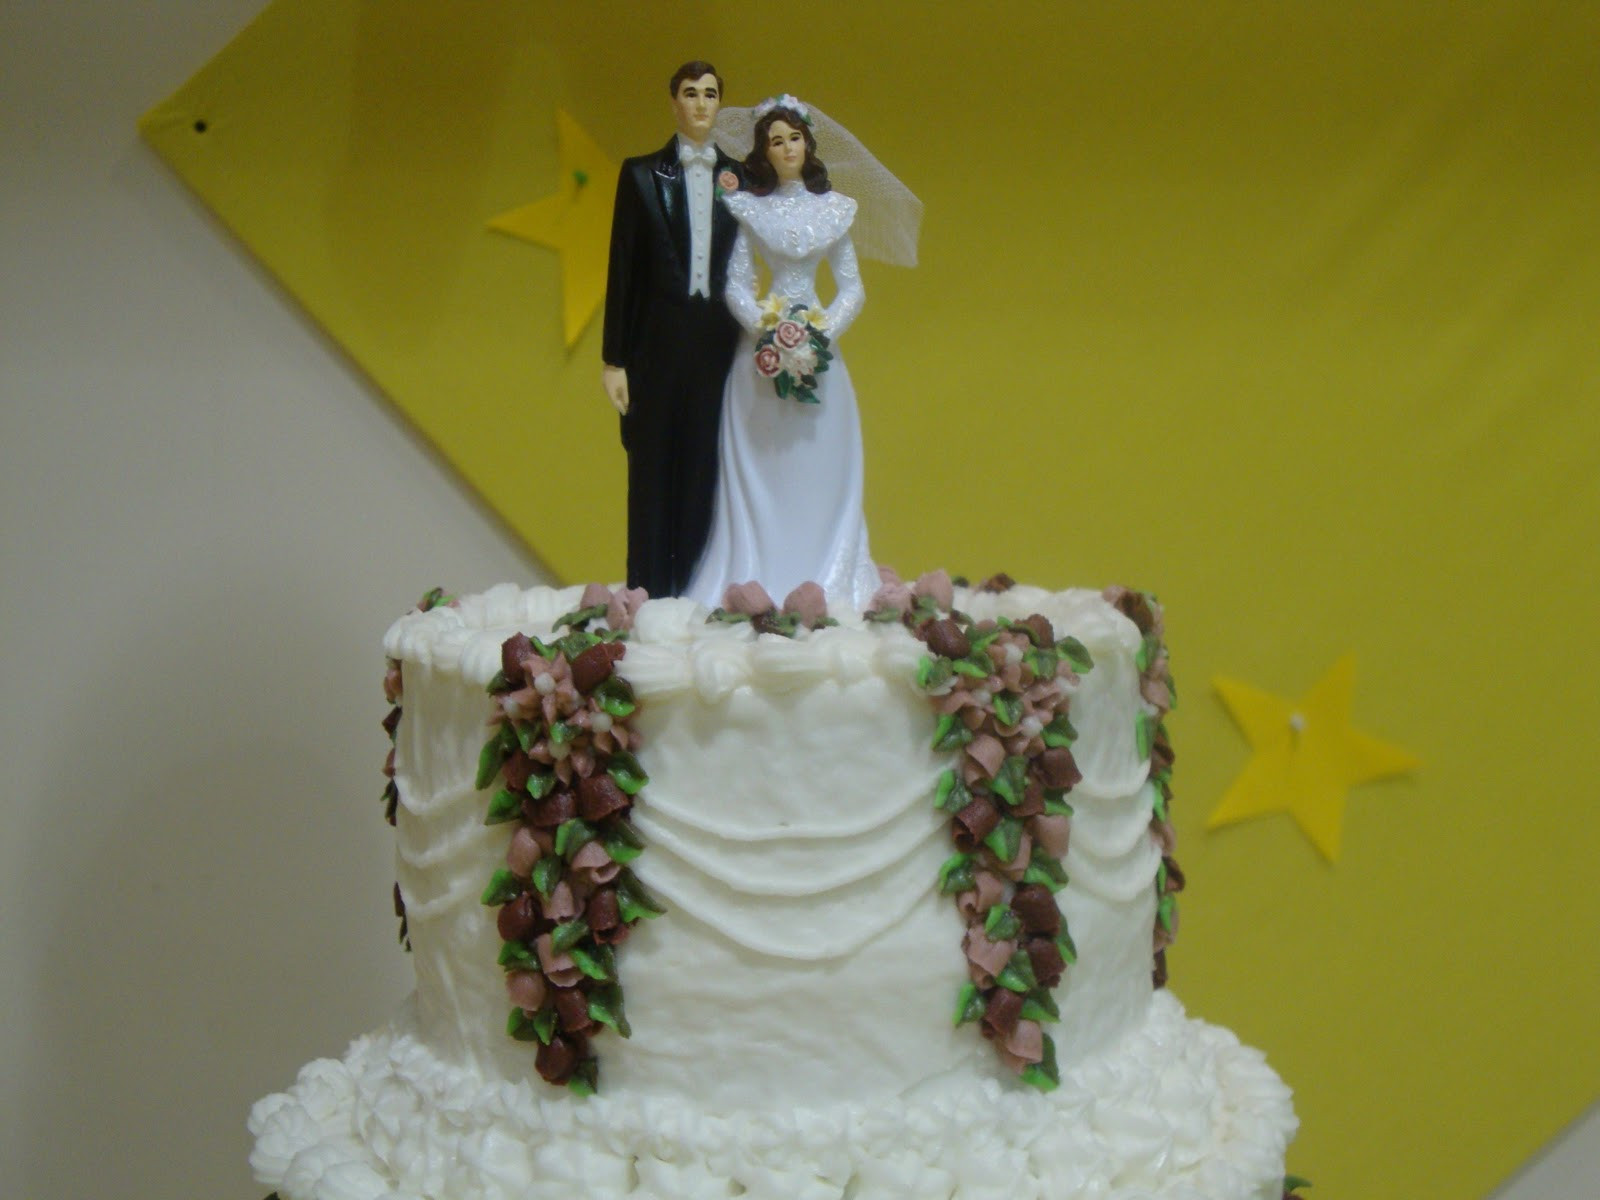 Old School Wedding Cakes
 Mega Pretty Cakes Old School Wedding Cake with Groom s Cake